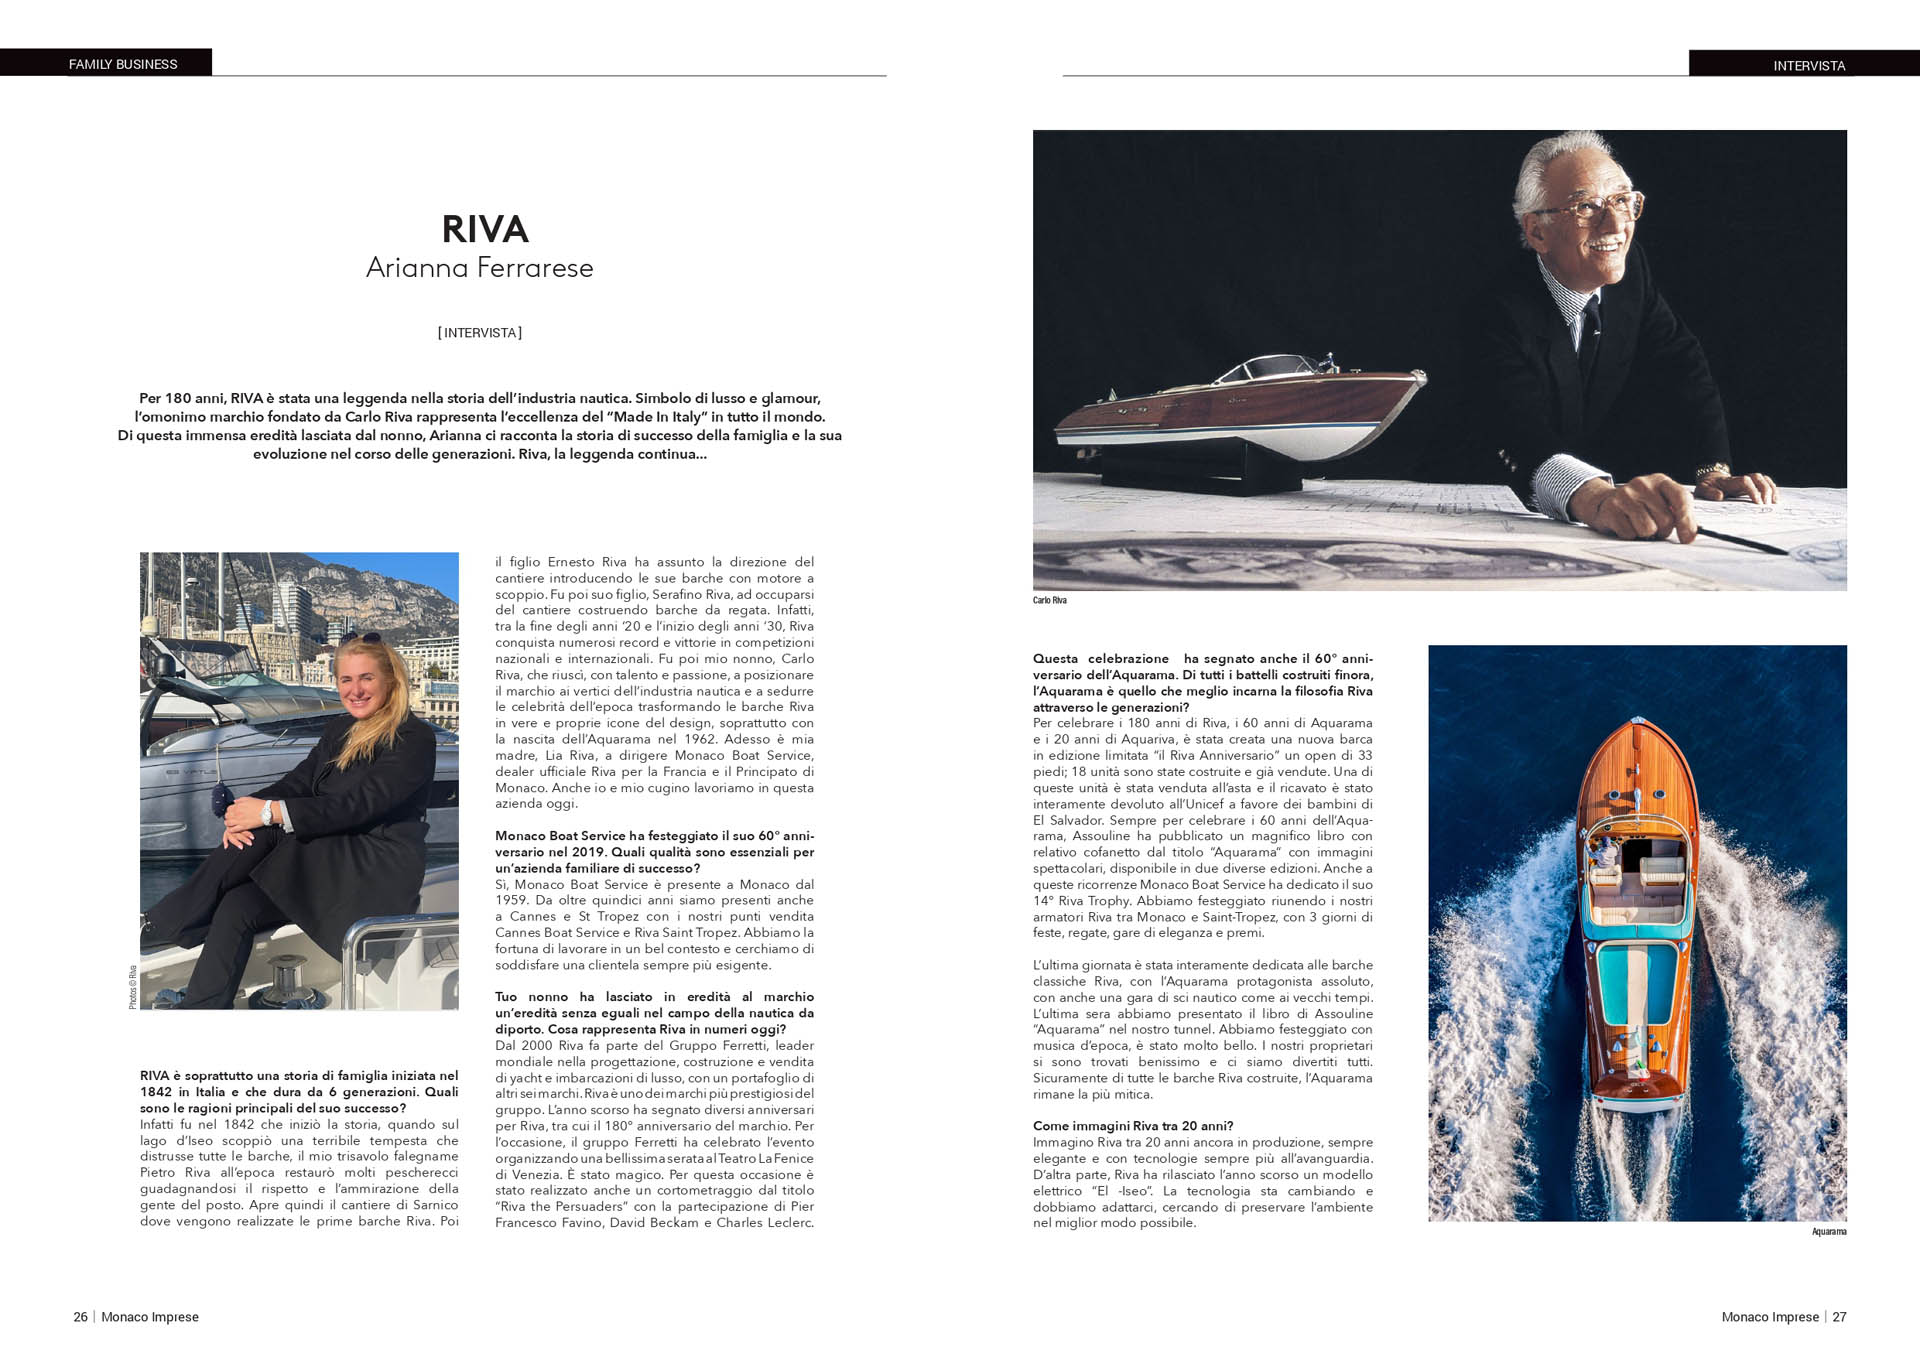 RIVA magazine Monaco Imprese 56_pages-to-jpg-0003